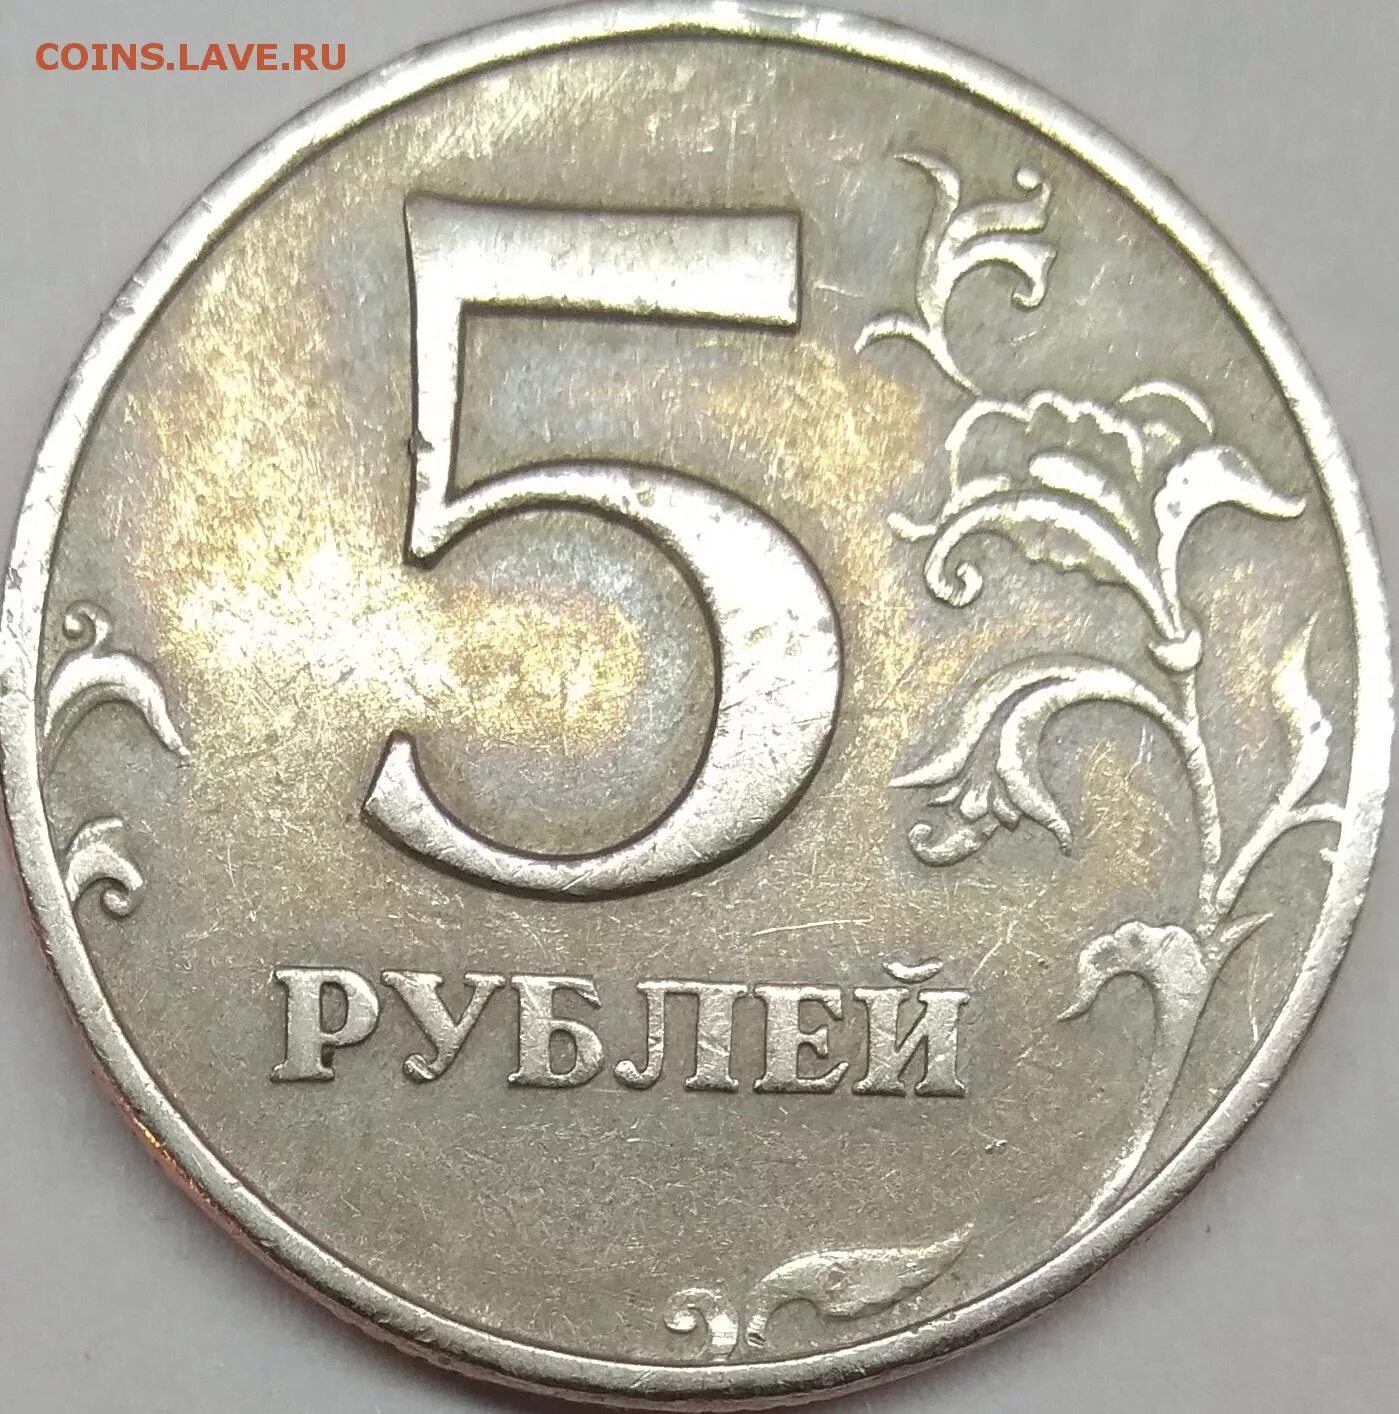 ММД монеты 1997-1998. 5 Рублей 1997 ММД. Монета 5 рублей 1997 ММД. 5 Рублей 1997 ММД Медно-алюминиевая.